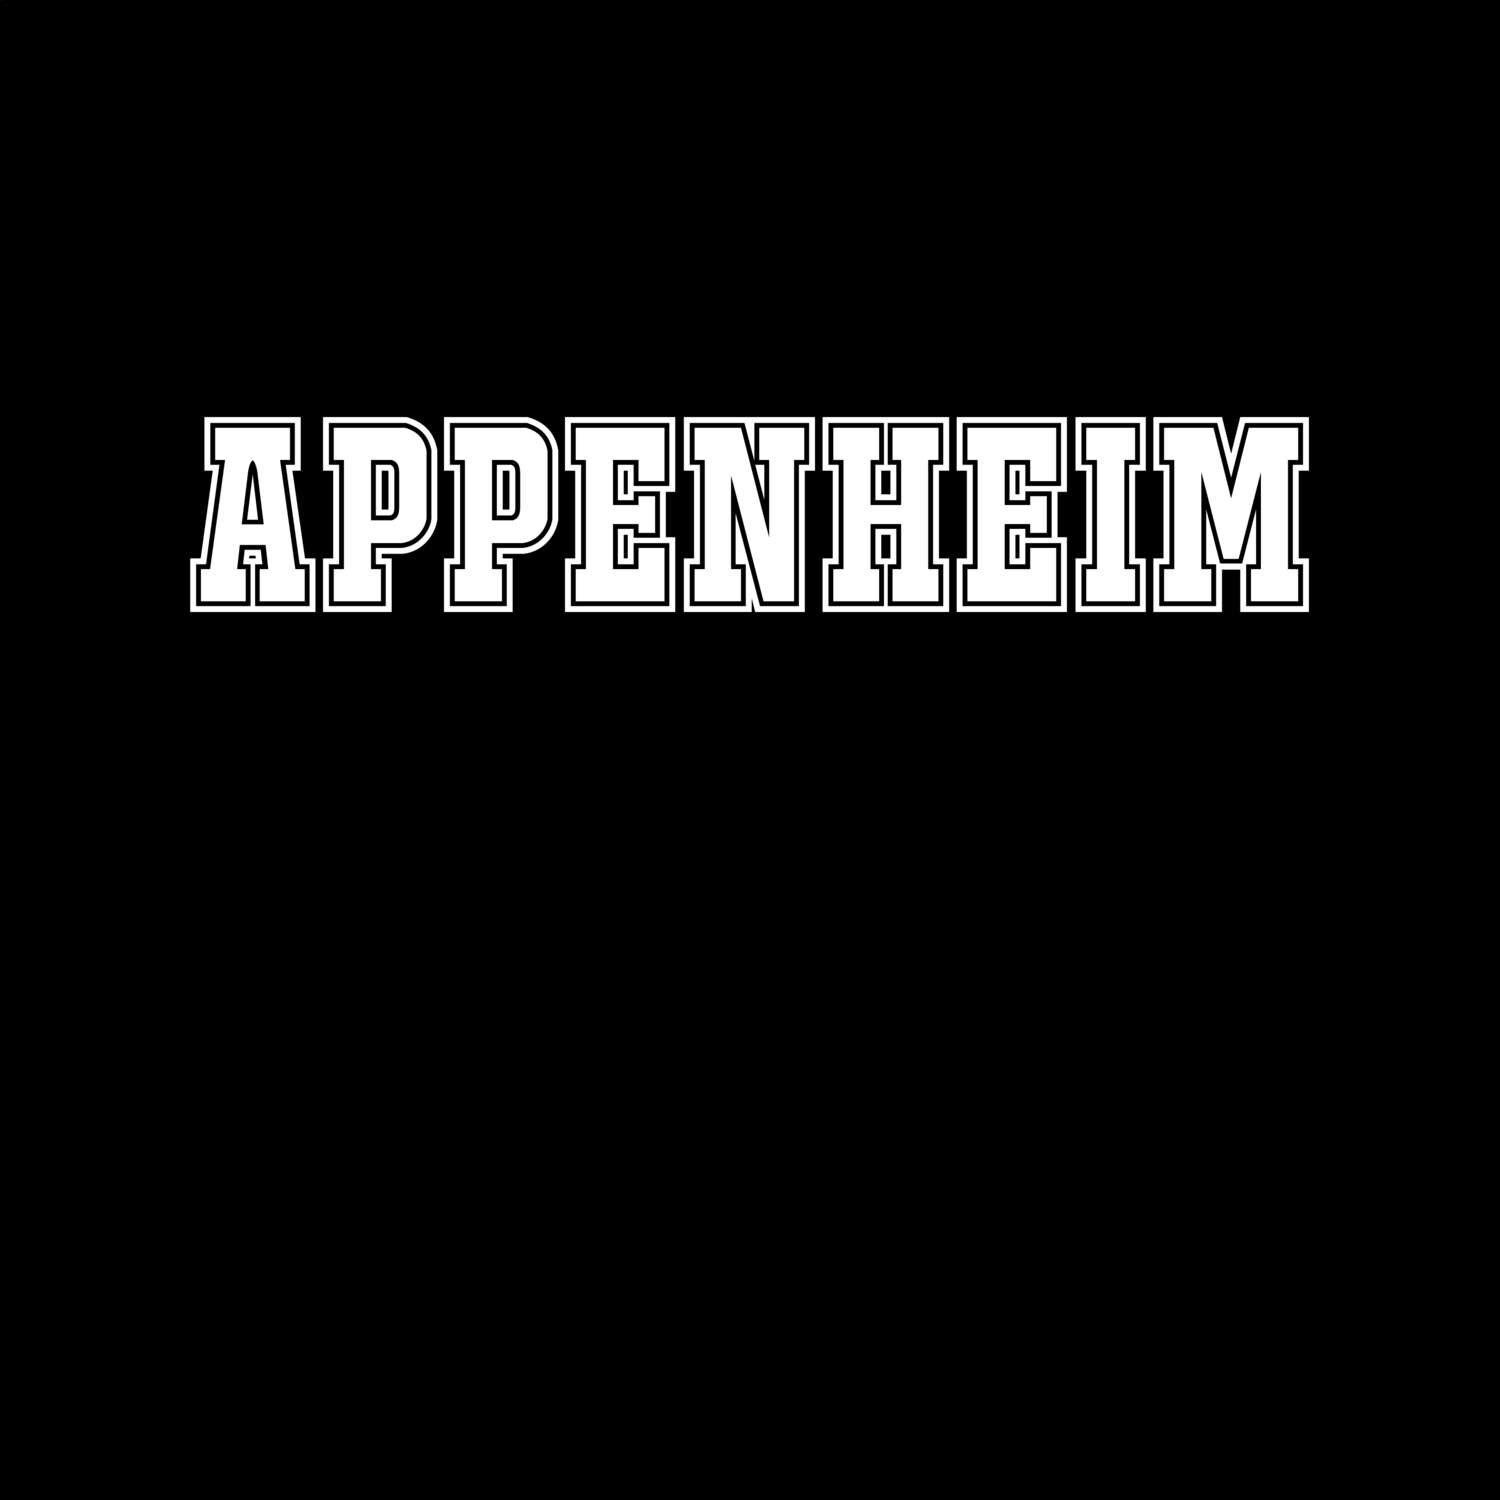 Appenheim T-Shirt »Classic«